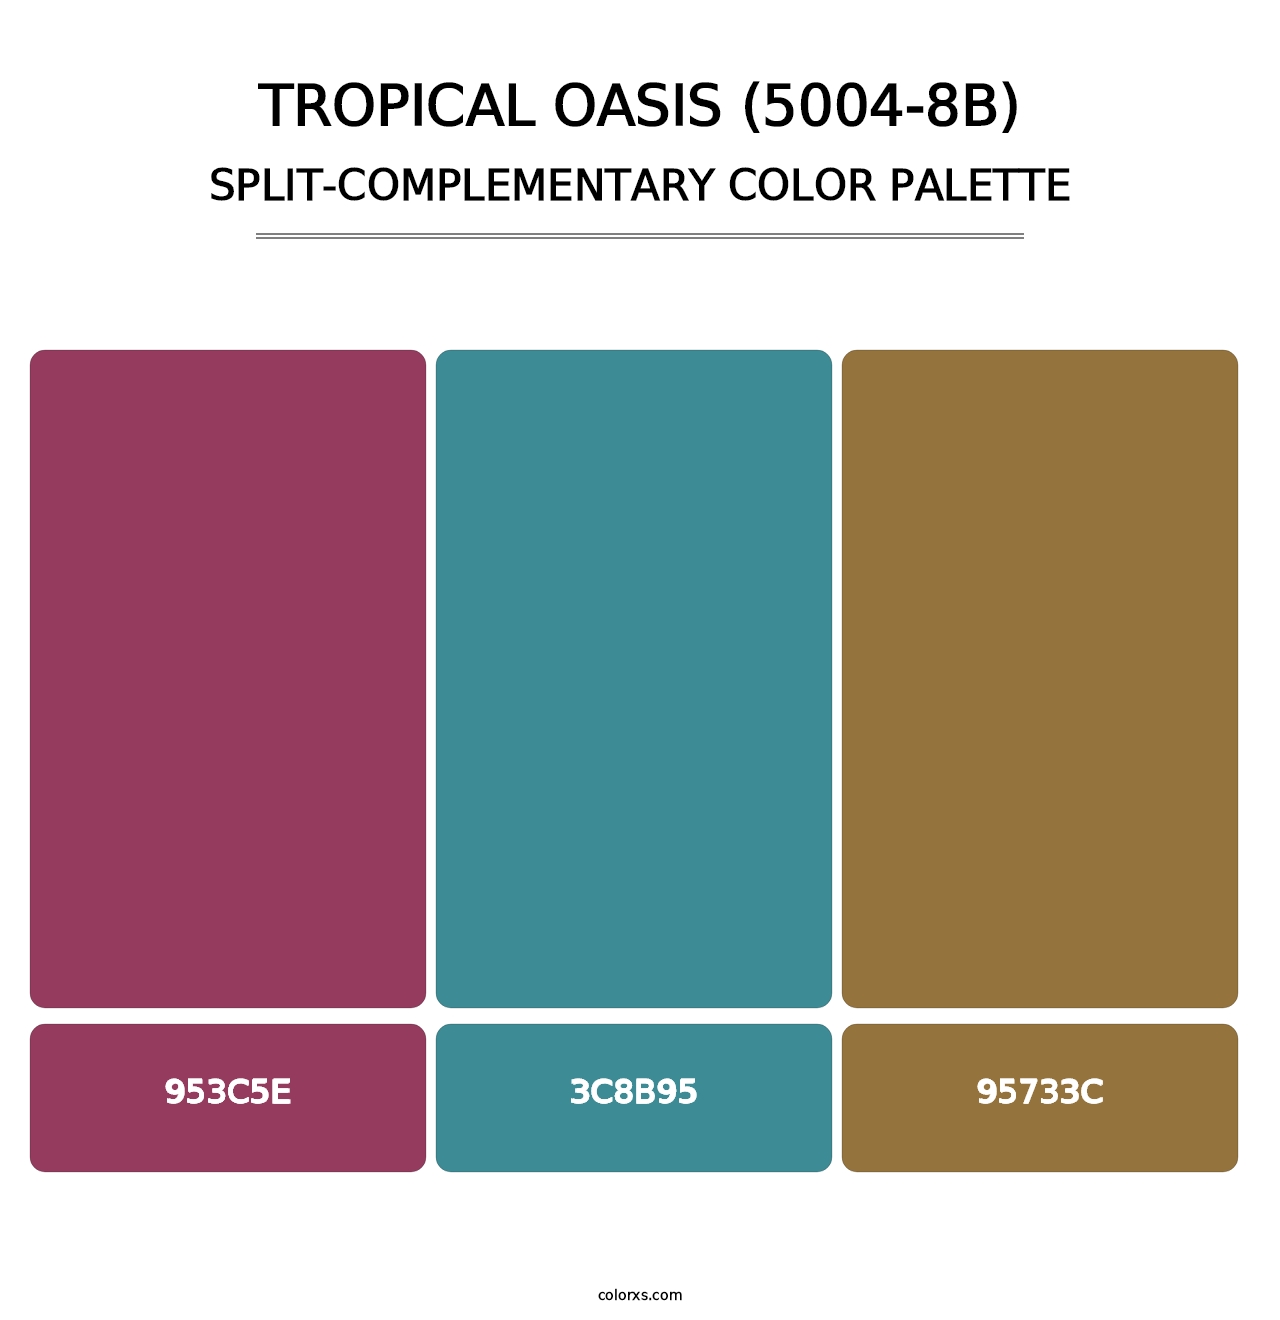 Tropical Oasis (5004-8B) - Split-Complementary Color Palette